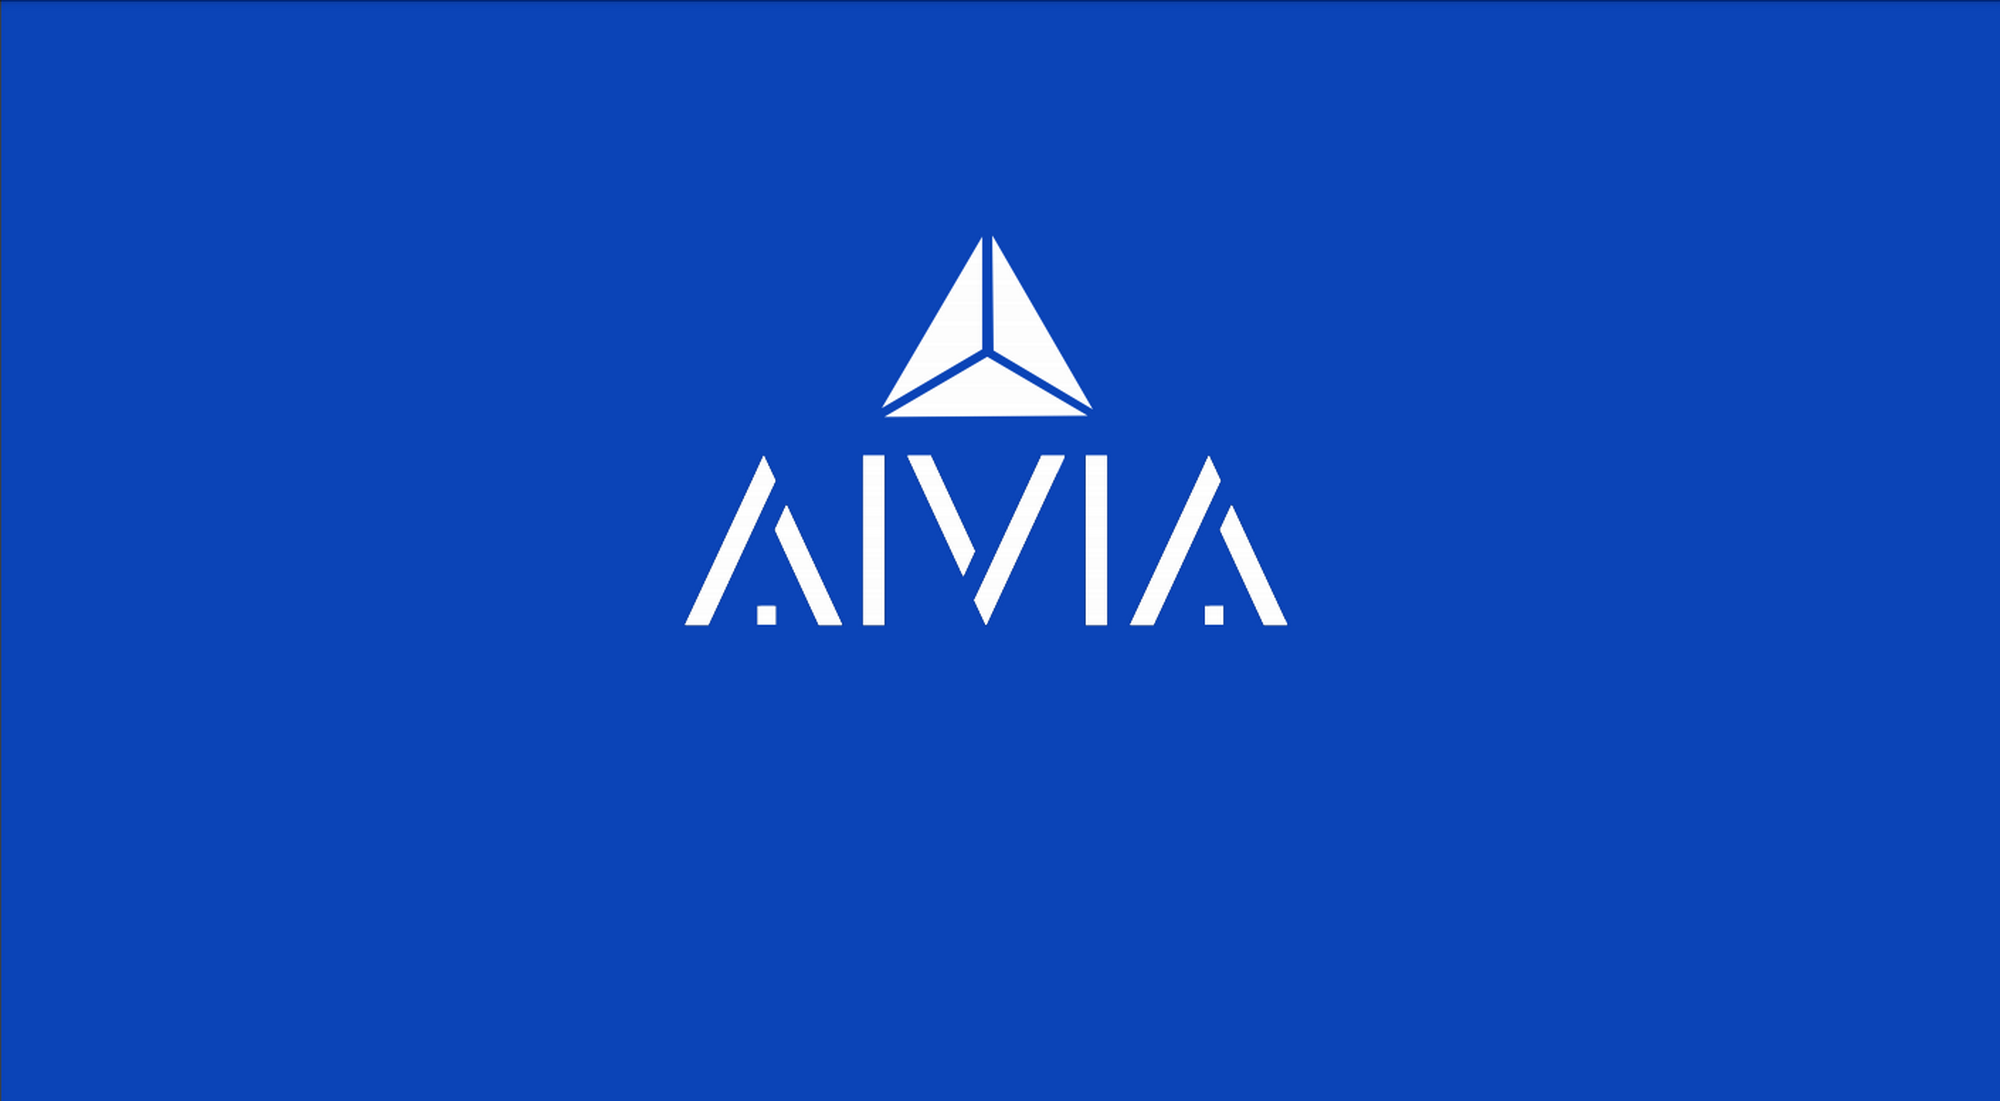 AIVIA запустила партнерскую программу